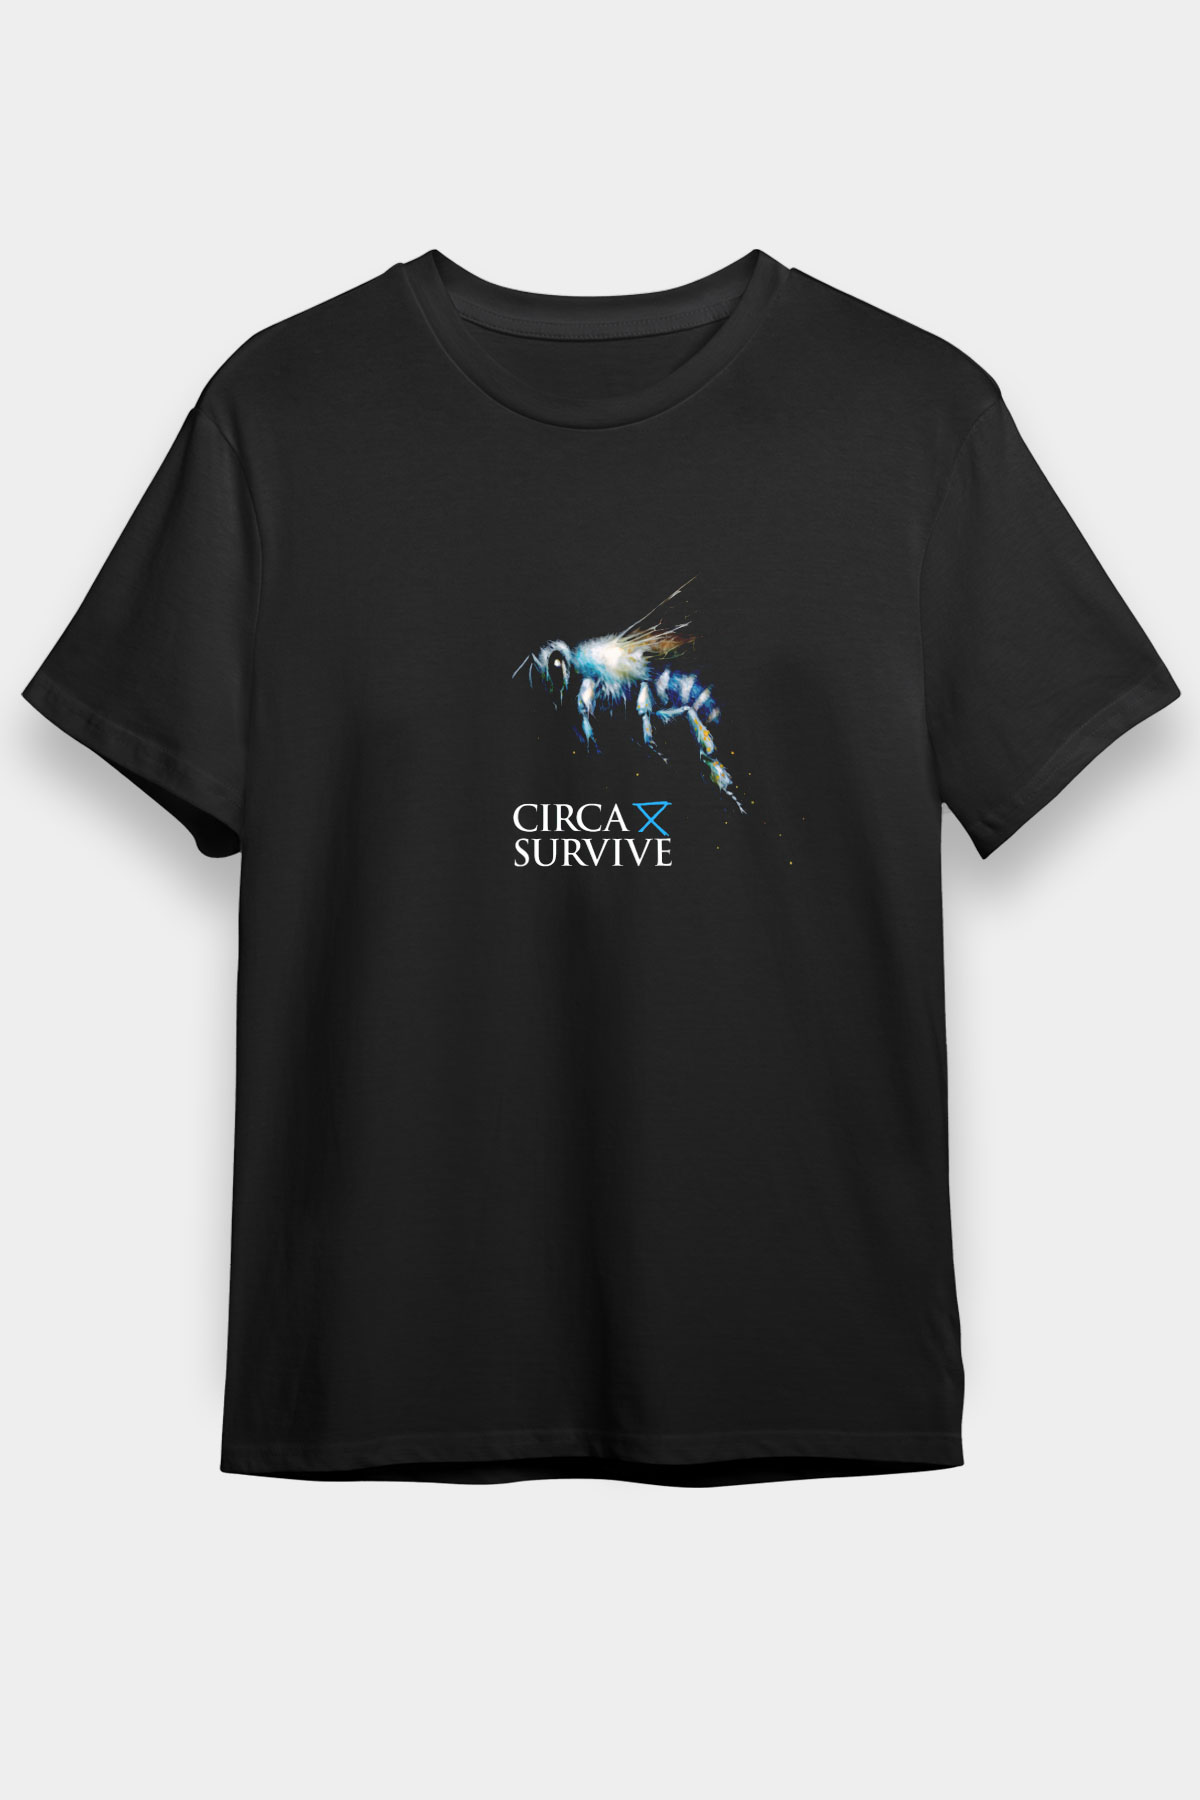 Circa Survive T shirt, Music Band ,Unisex Tshirt 09